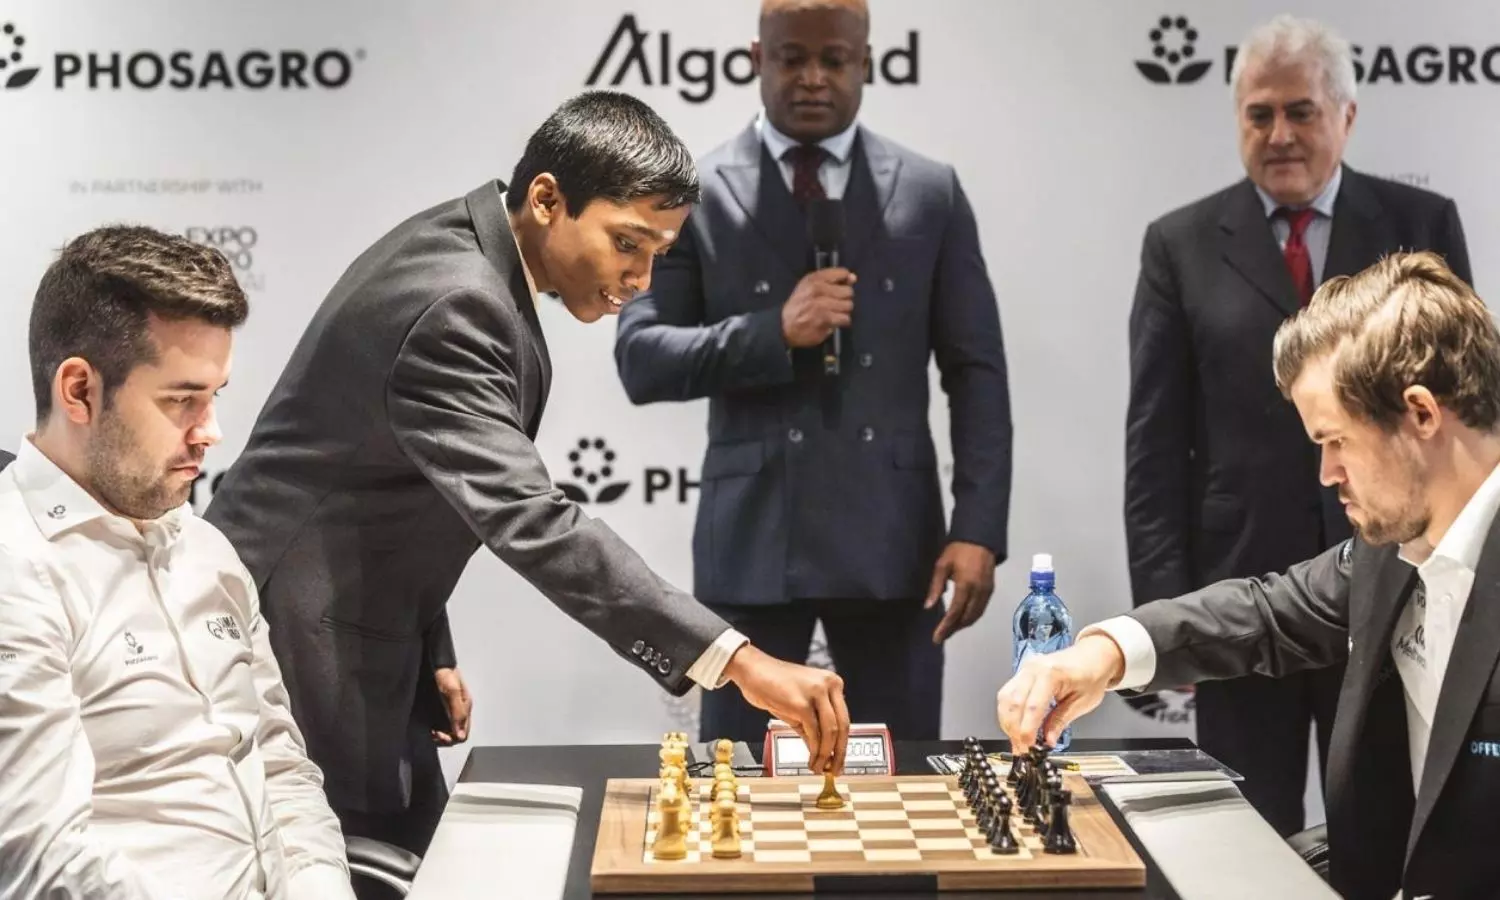 How To Watch R Praggnanandhaa Vs Magnus Carlsen FIDE World Chess